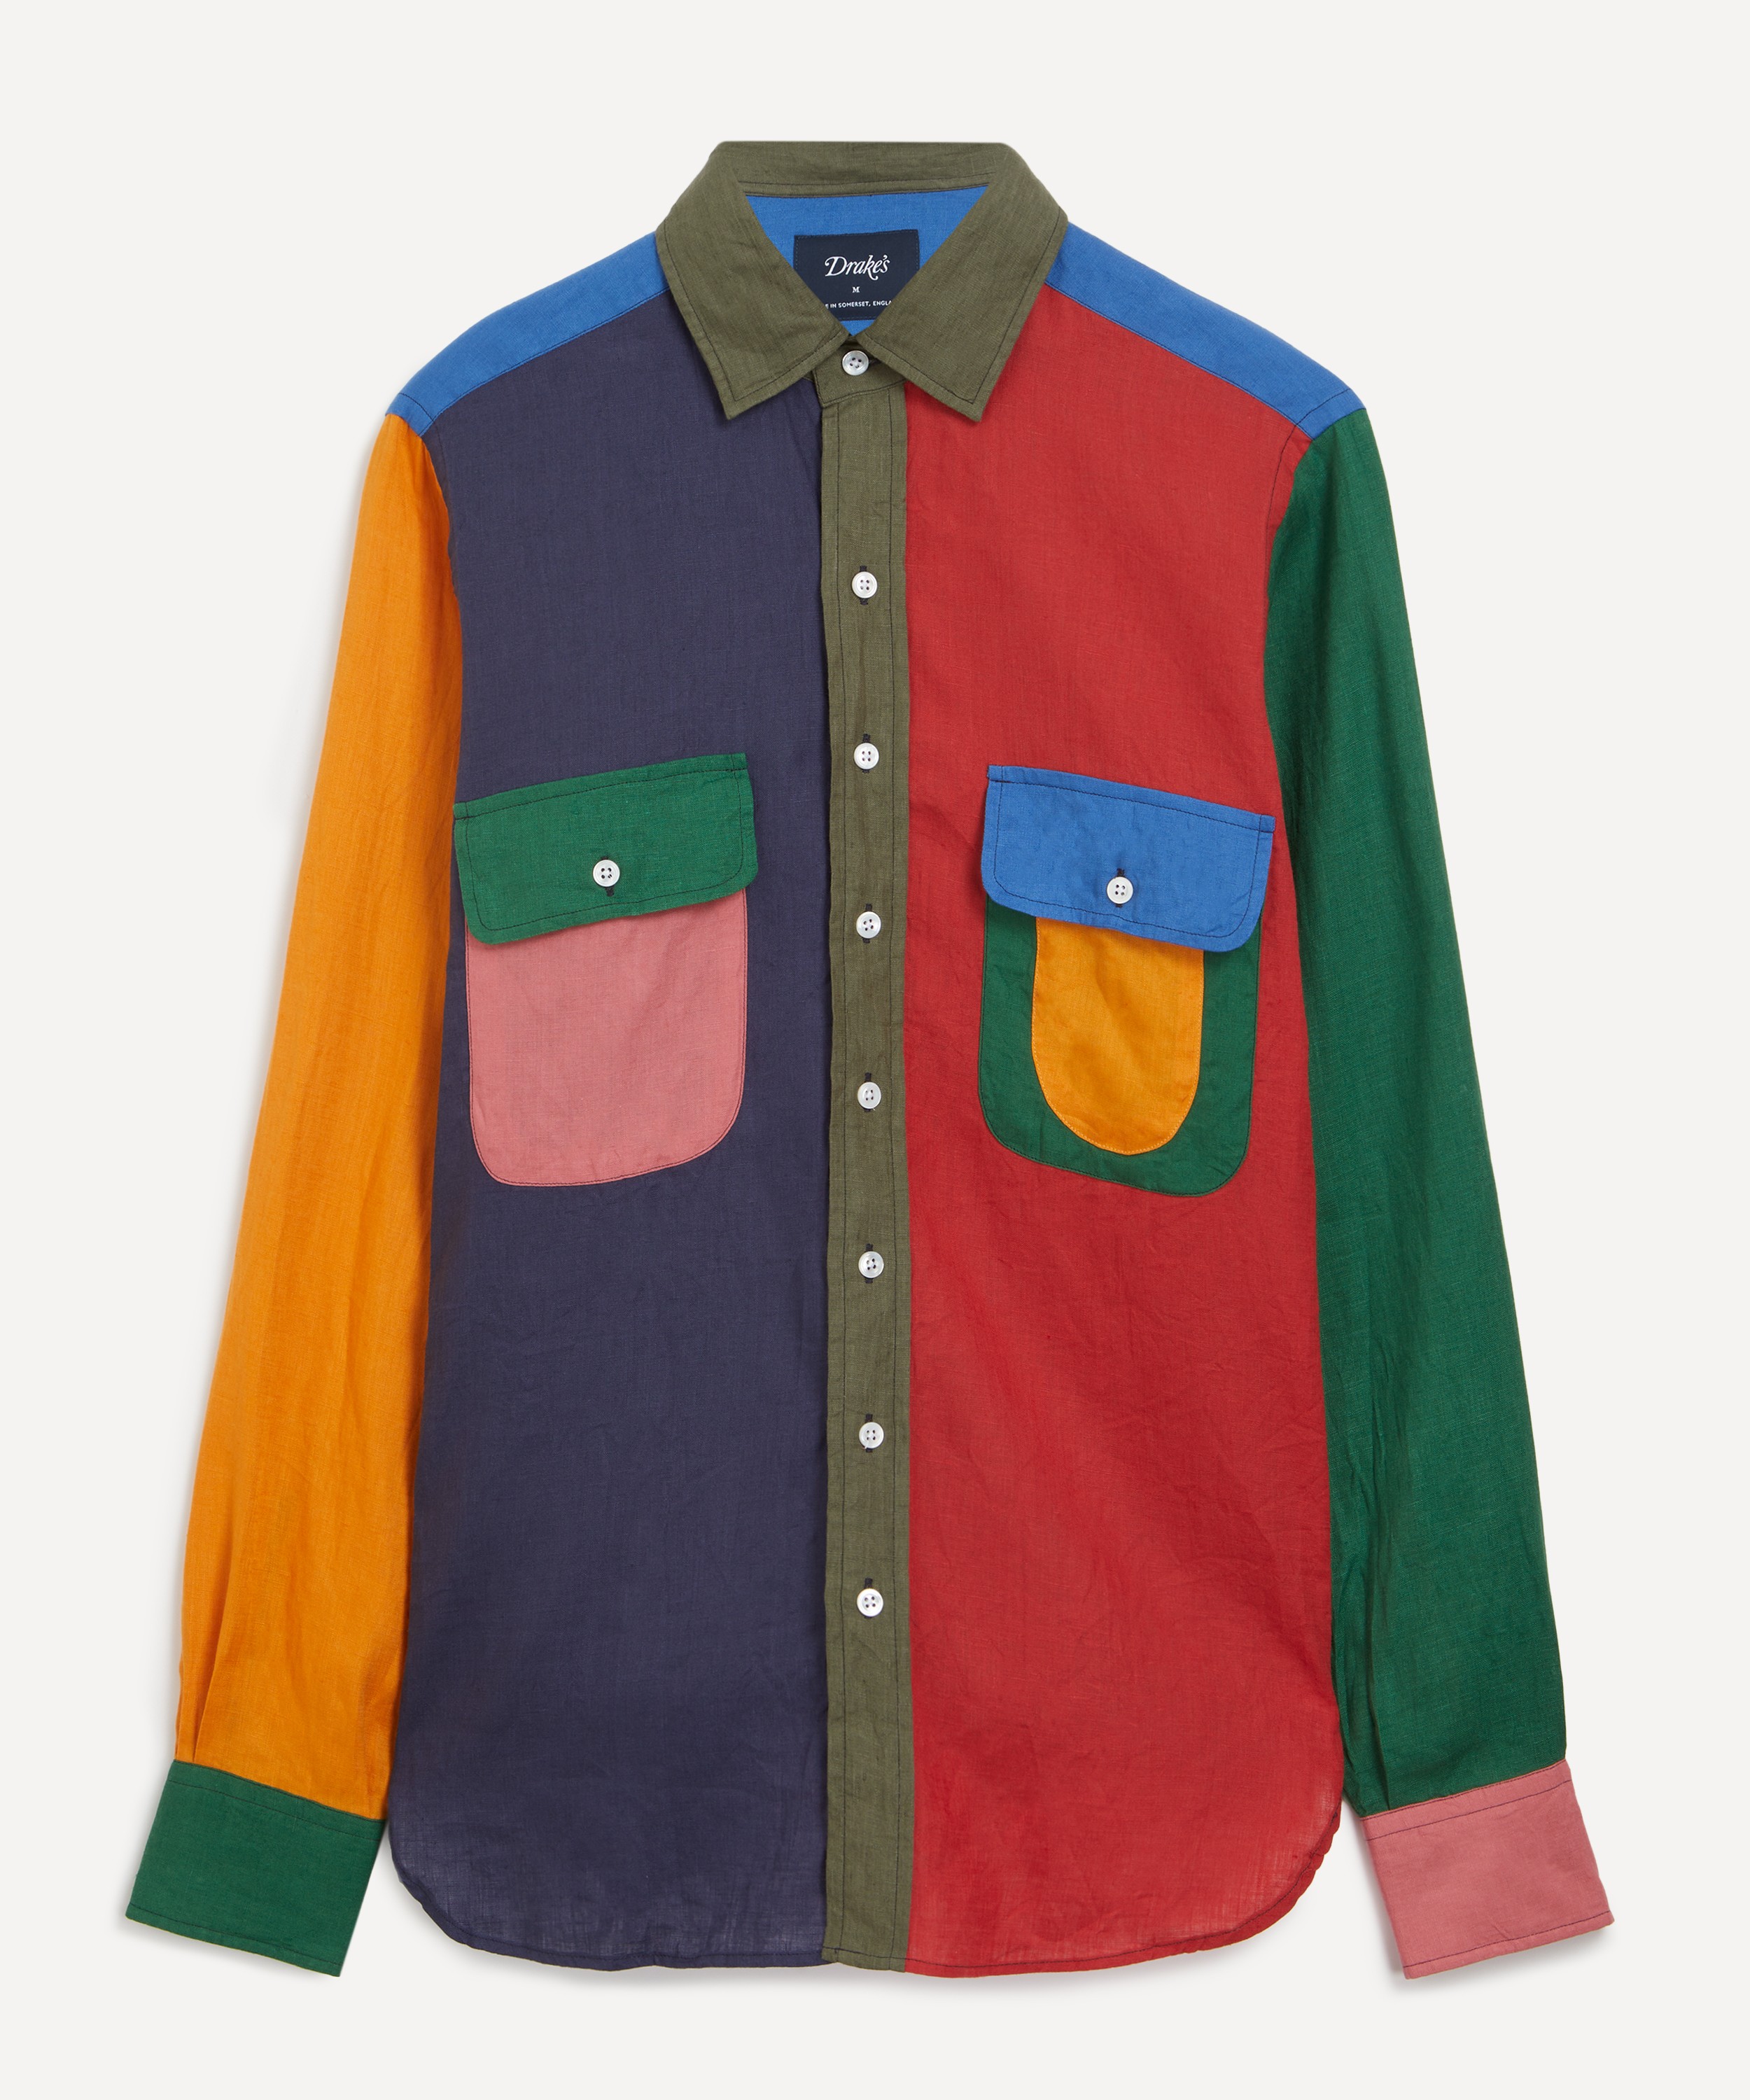 Drakes - Multicoloured Fun Work Shirt